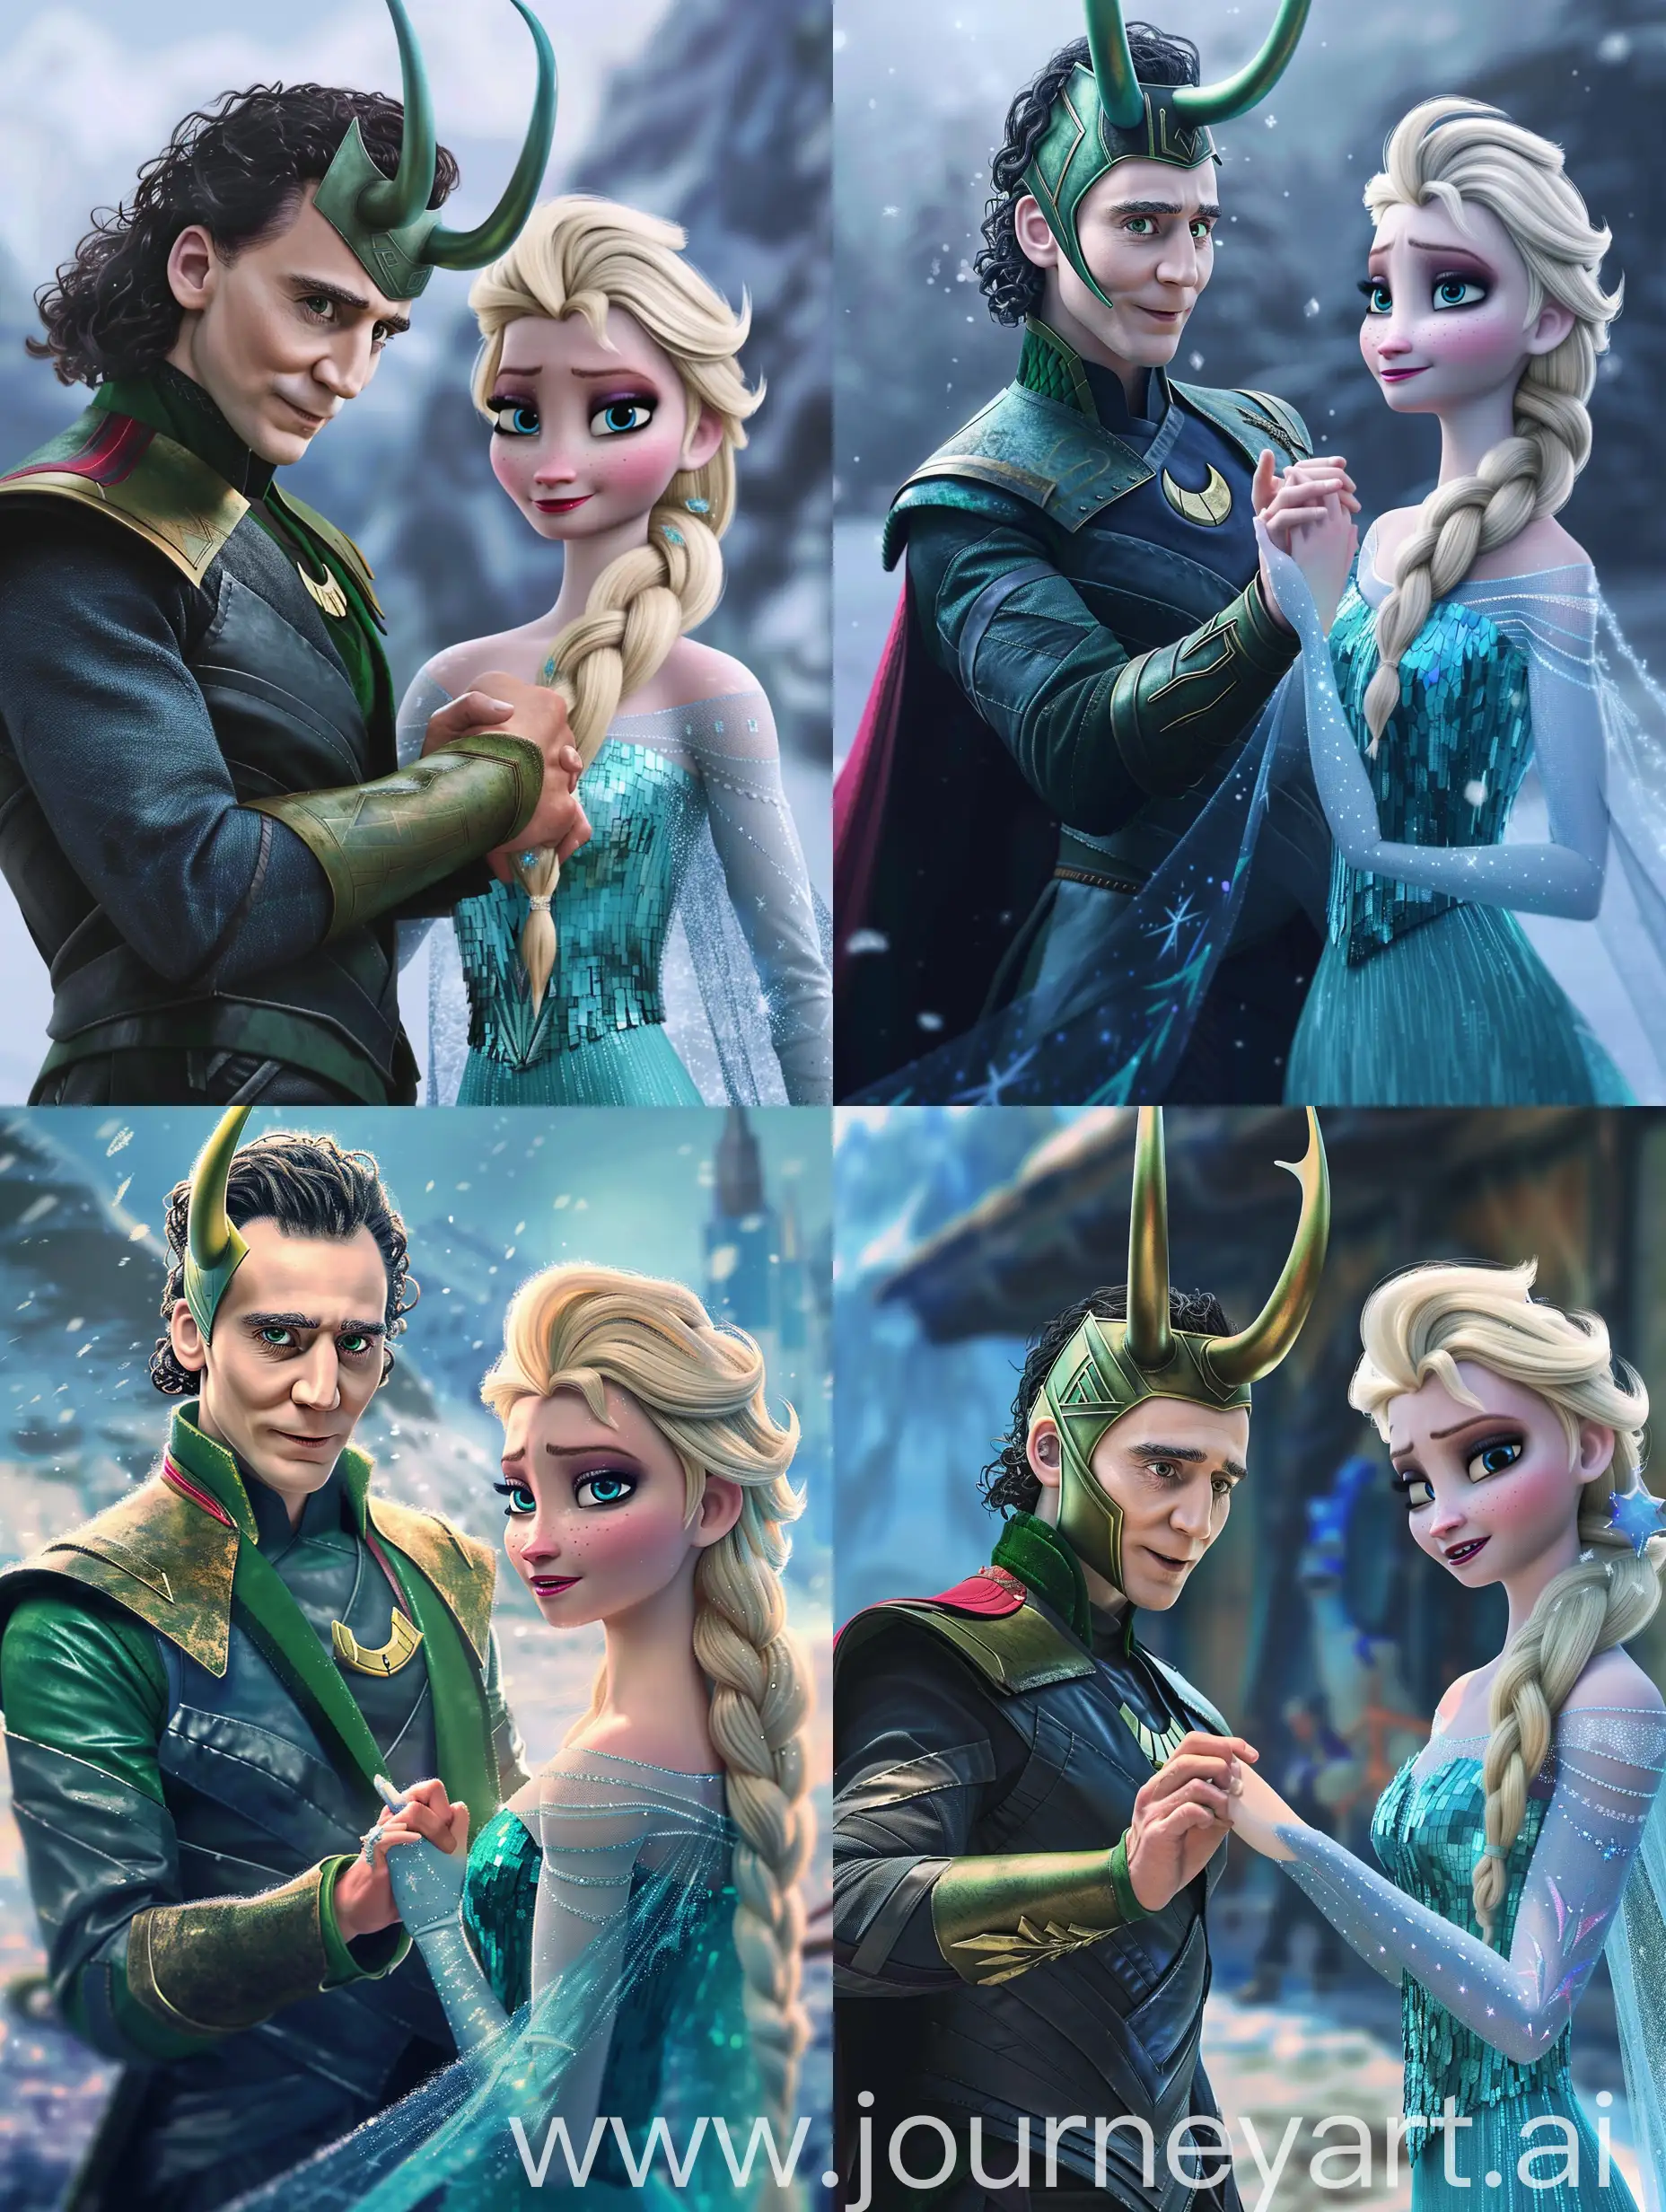 Tm Hiddleston as Loki romantically holding the hand of Elsa from Frozen